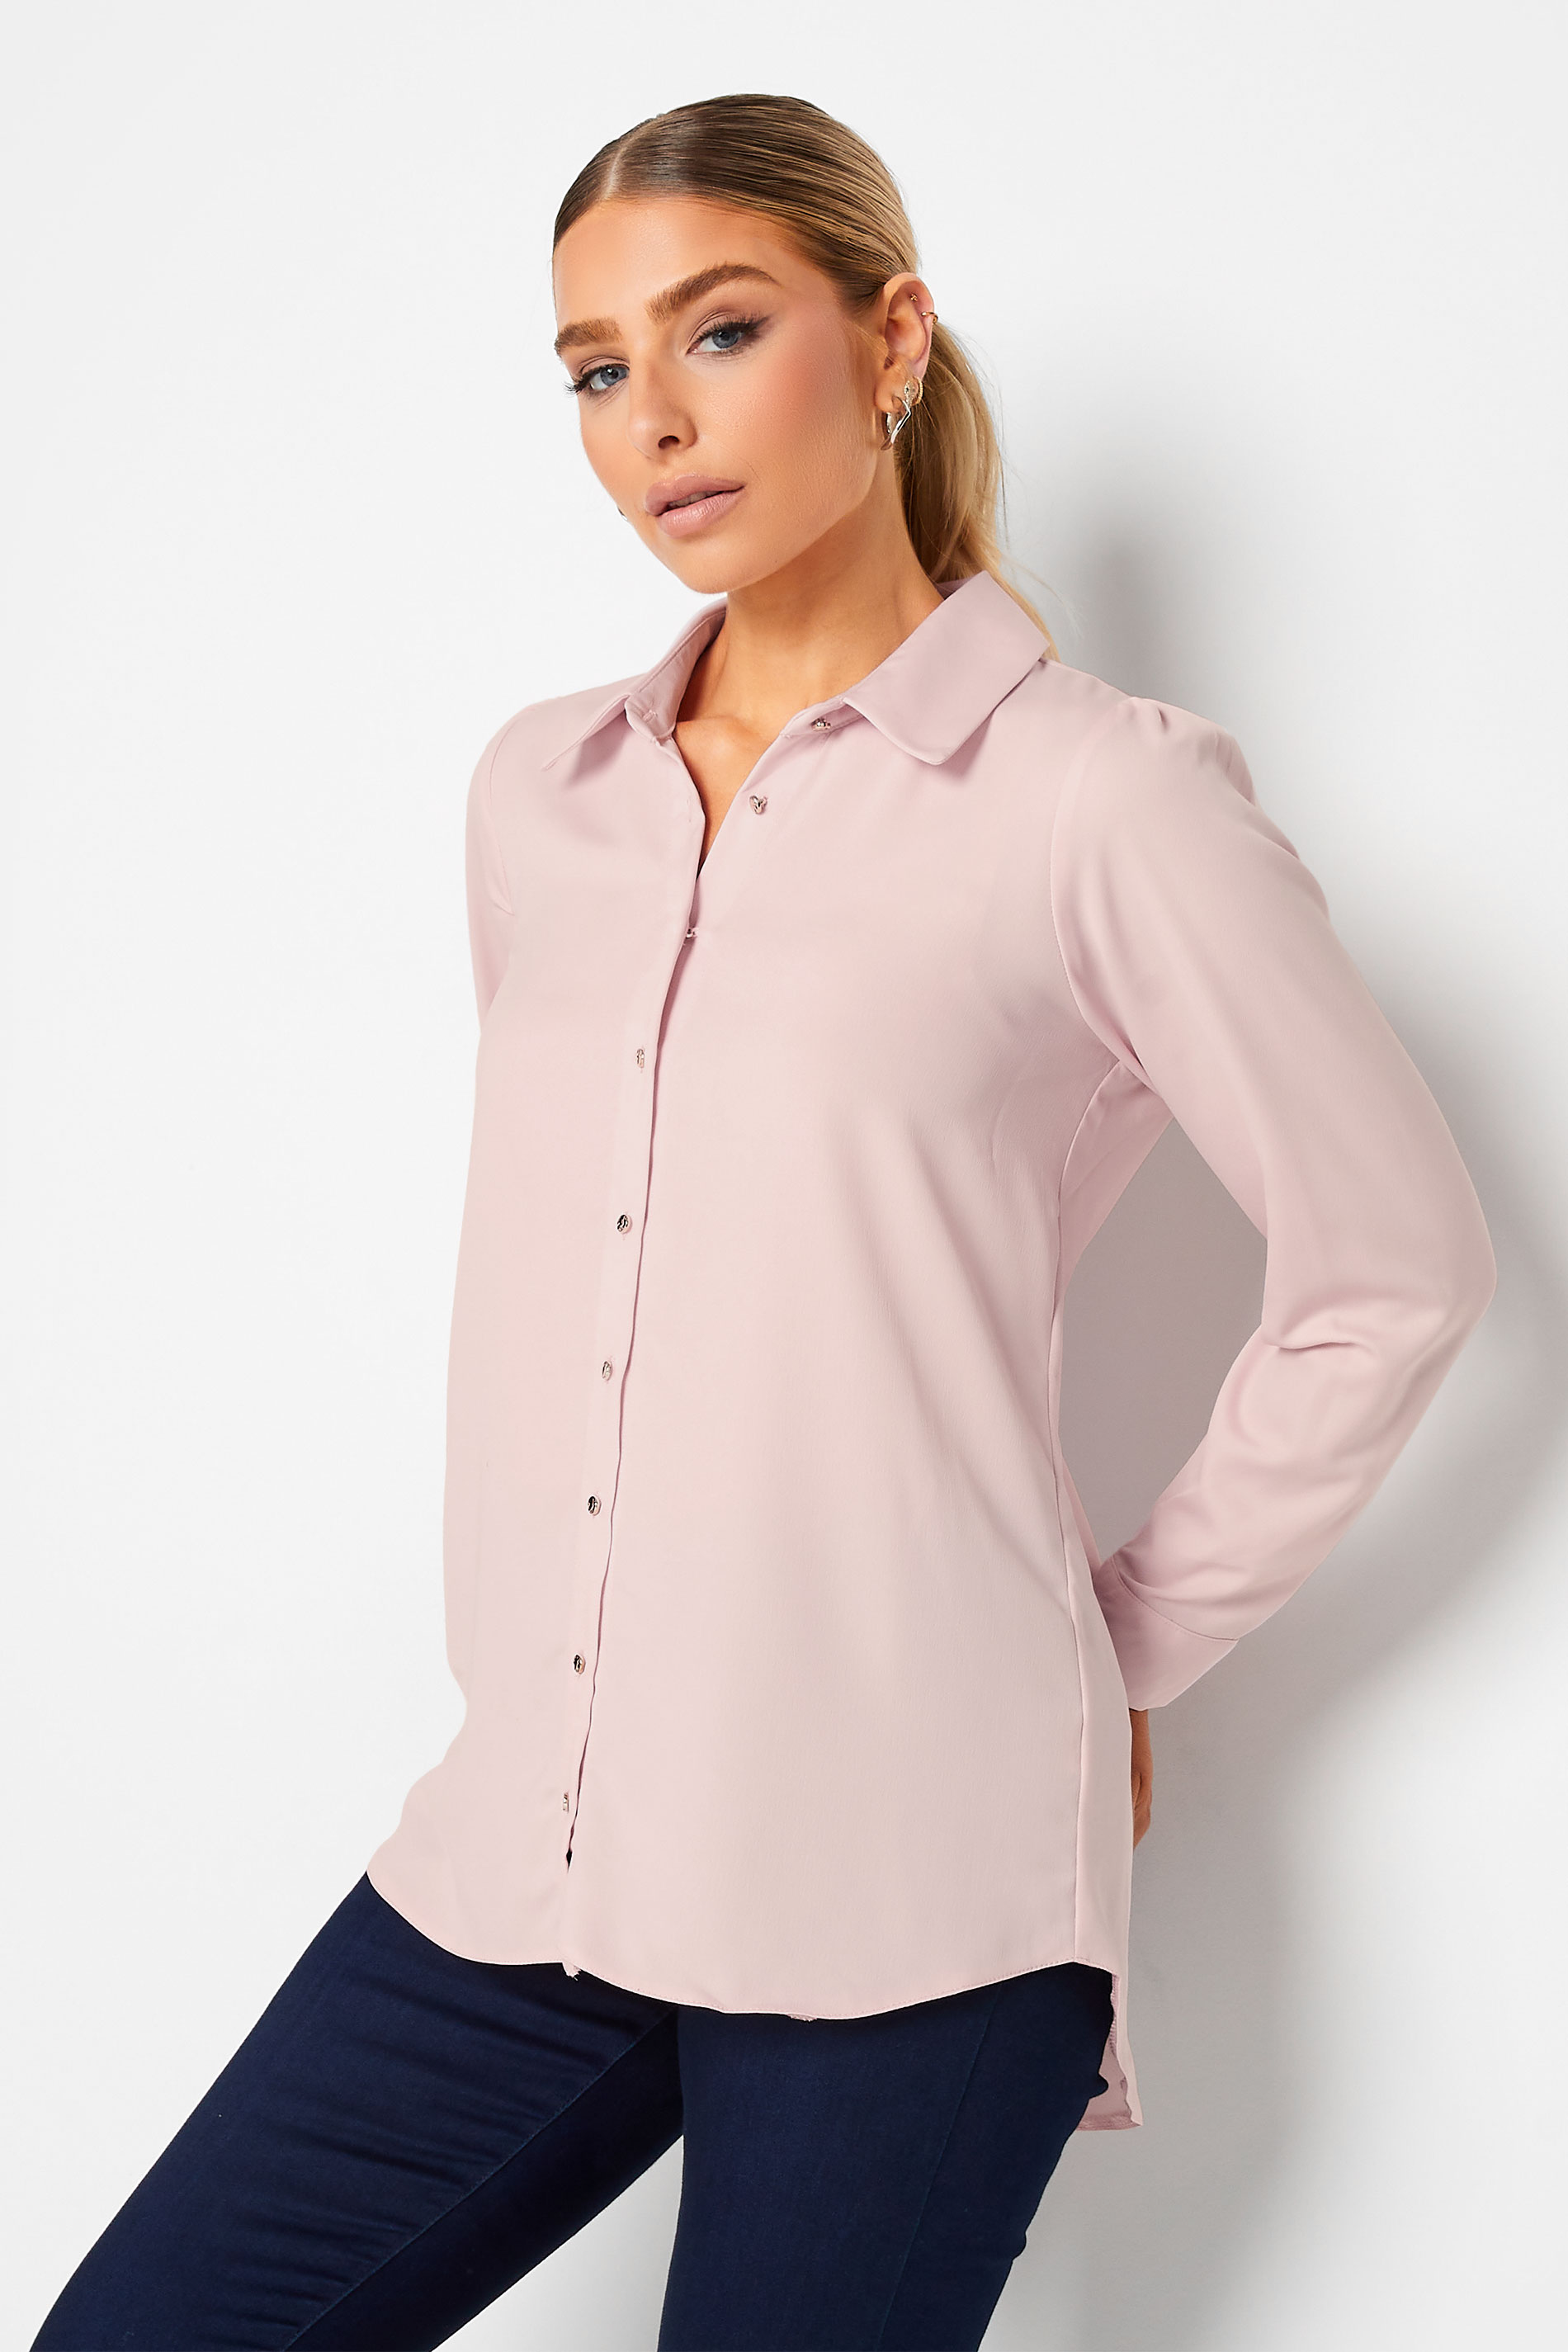 M&Co Light Pink Tie Back Tunic Shirt | M&Co 1